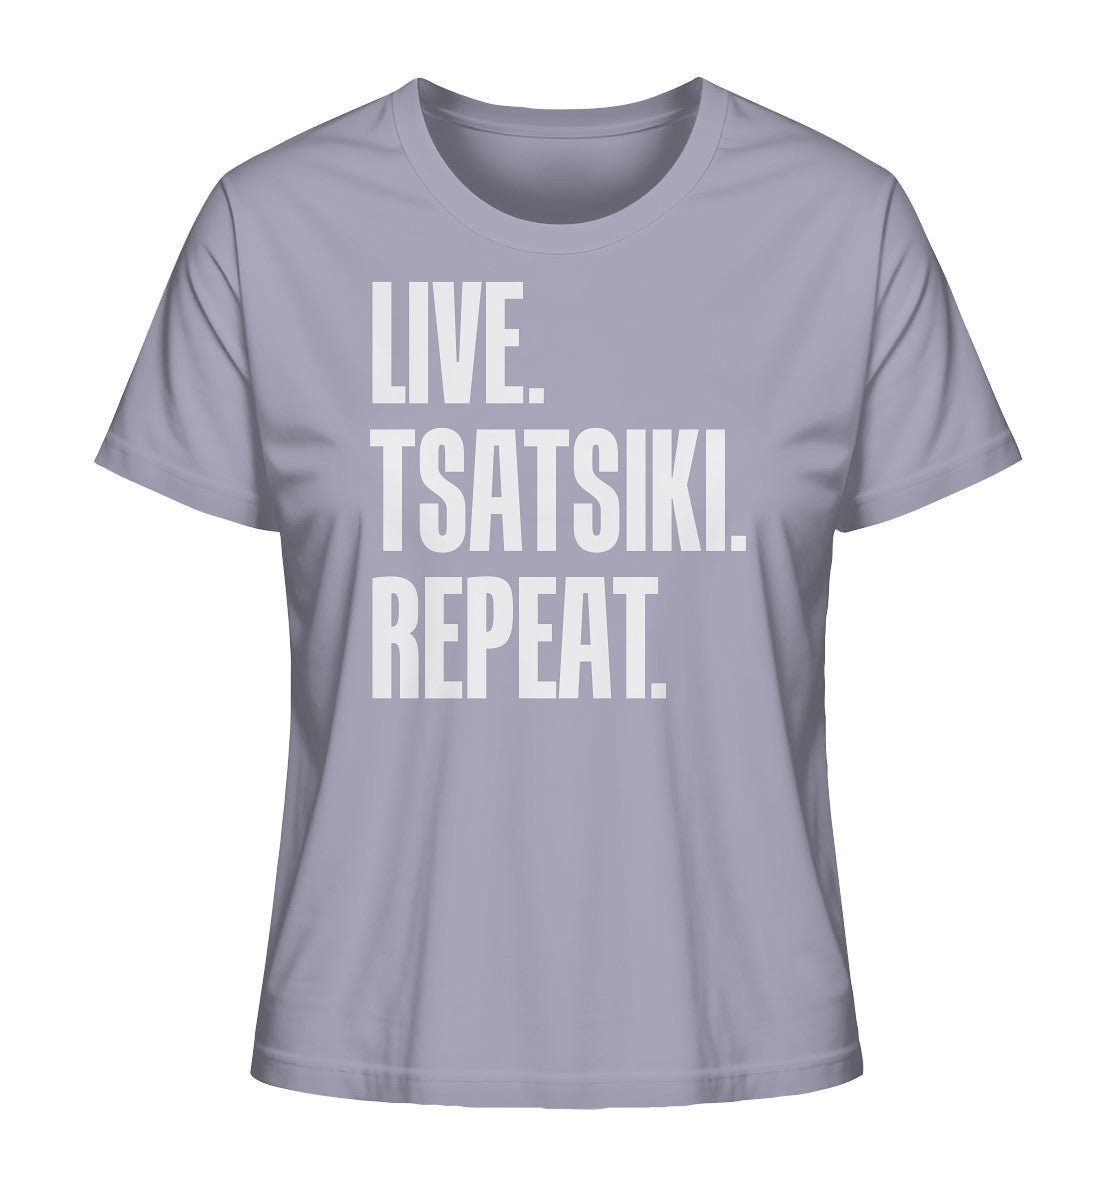 LIVE. TSATSIKI. REPEAT. - Ladies Organic Shirt